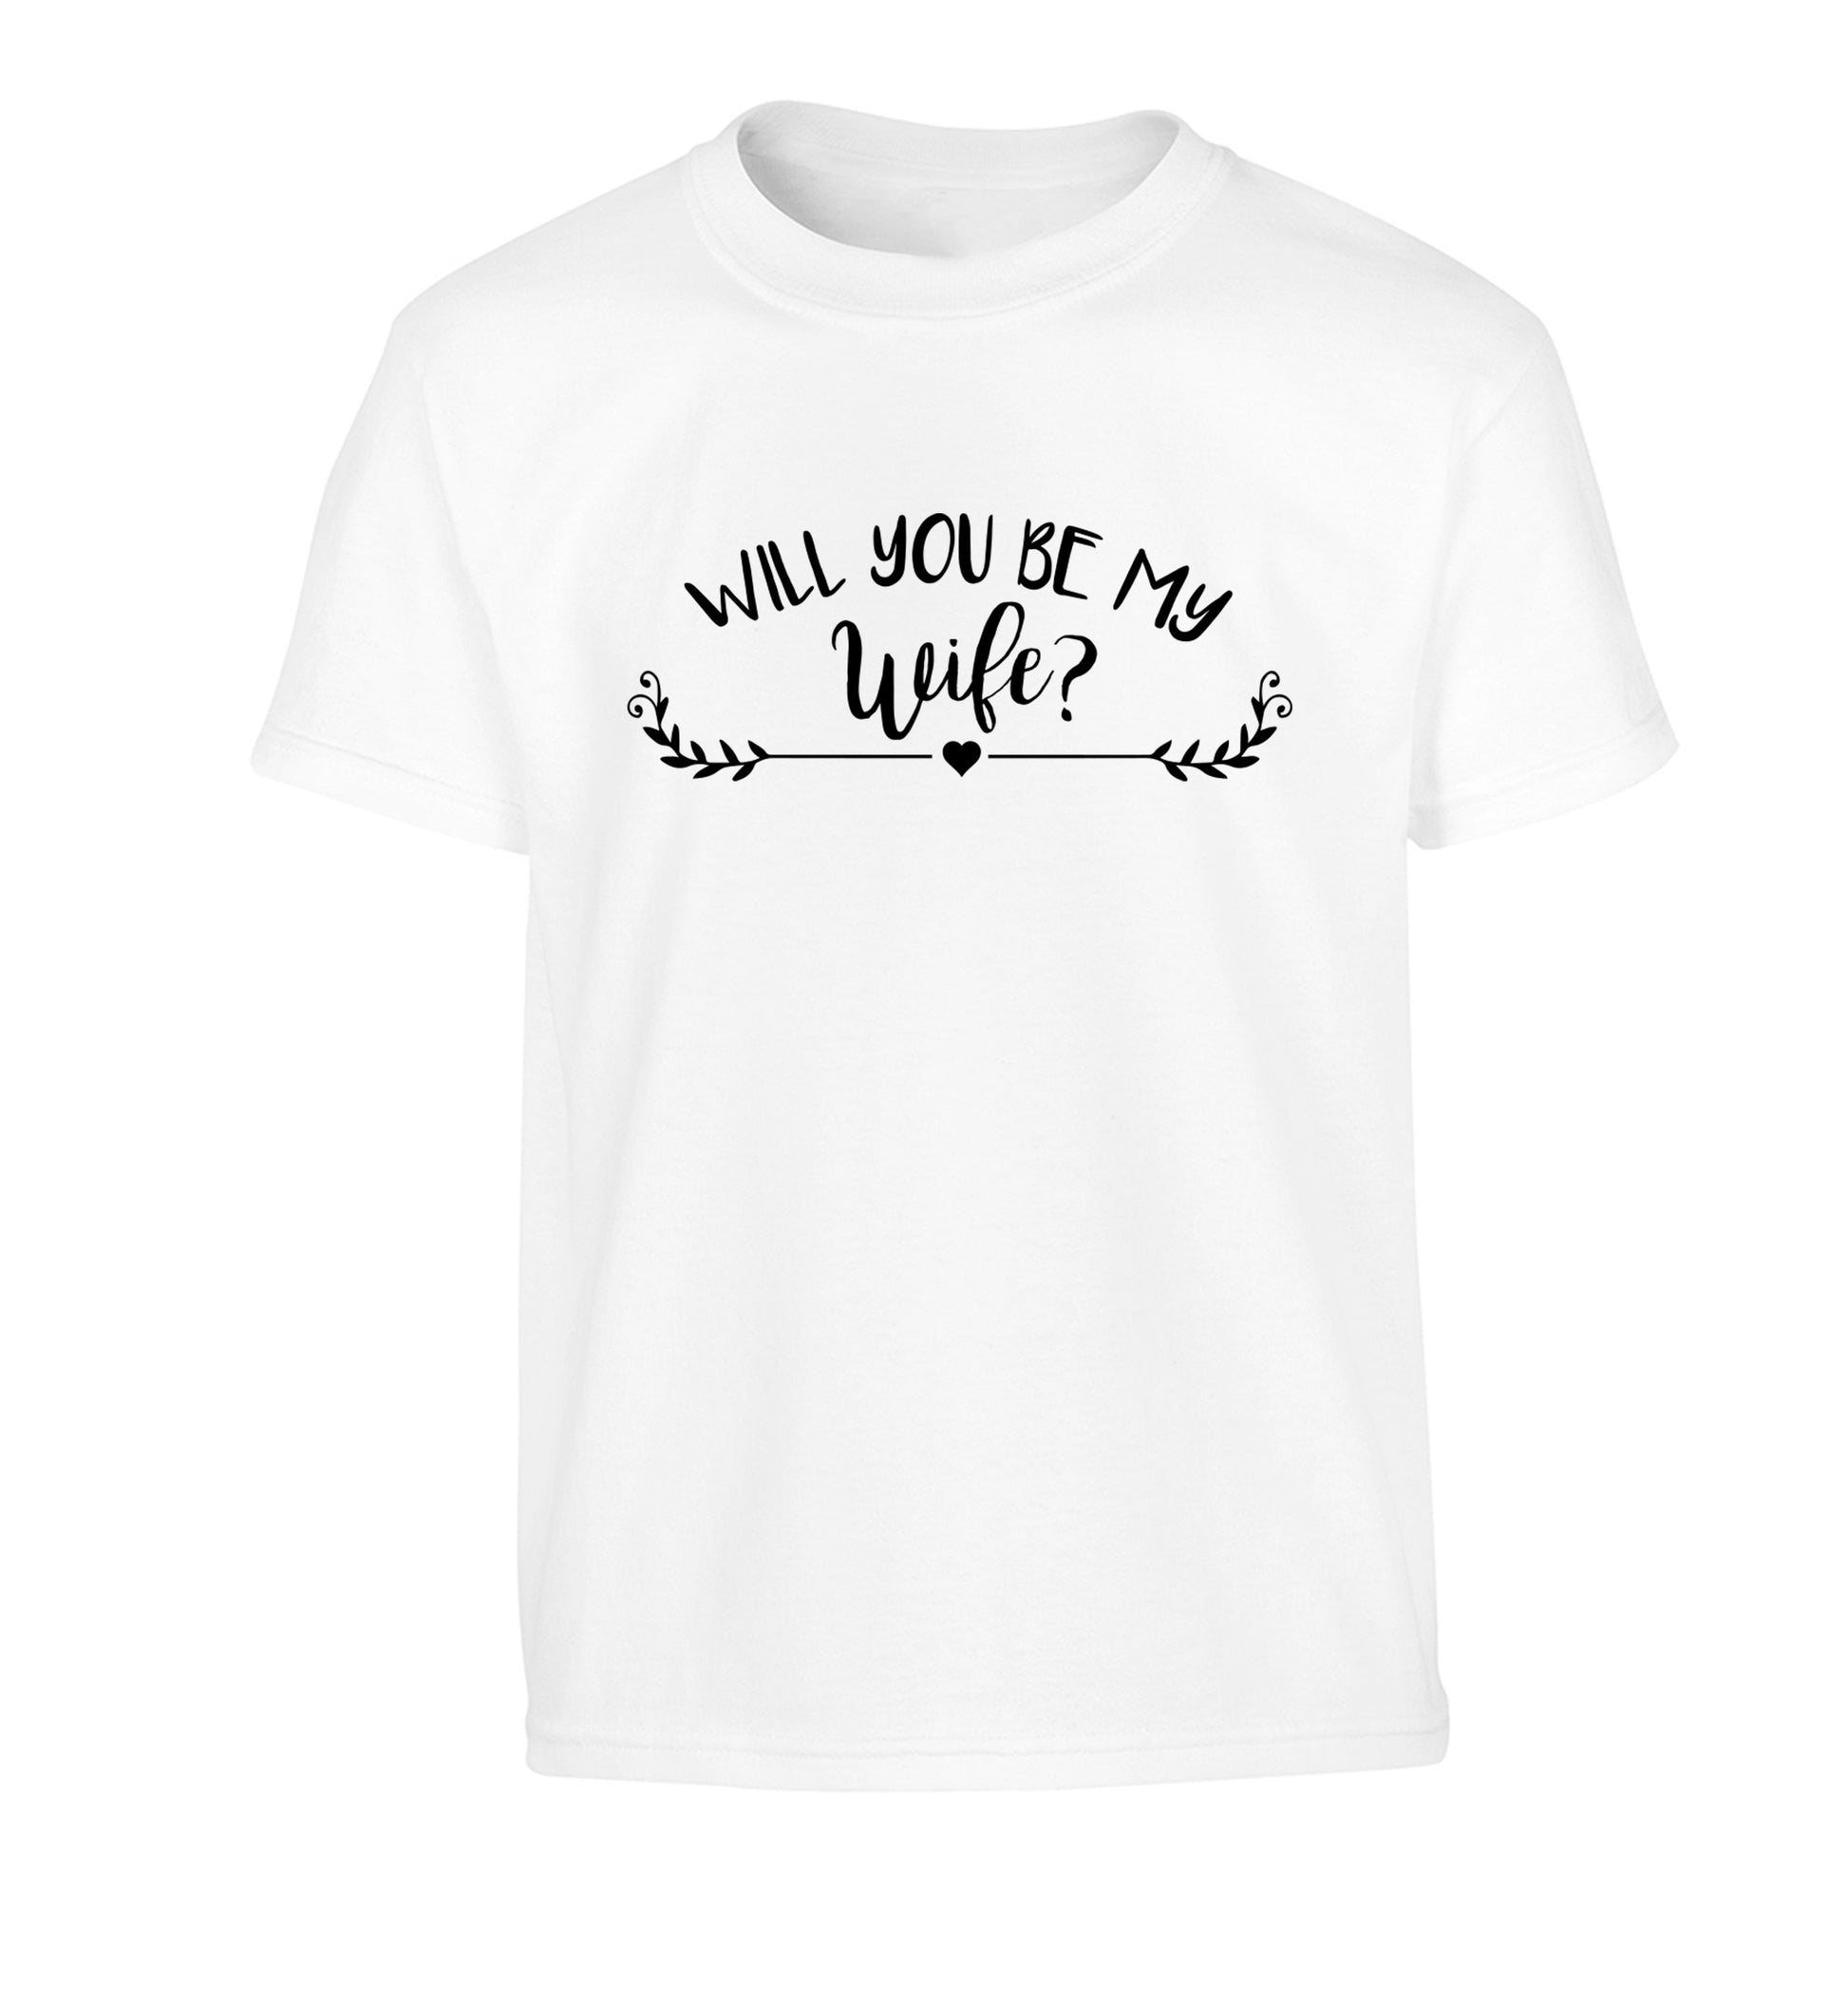 Will you be my wife? Children's white Tshirt 12-14 Years